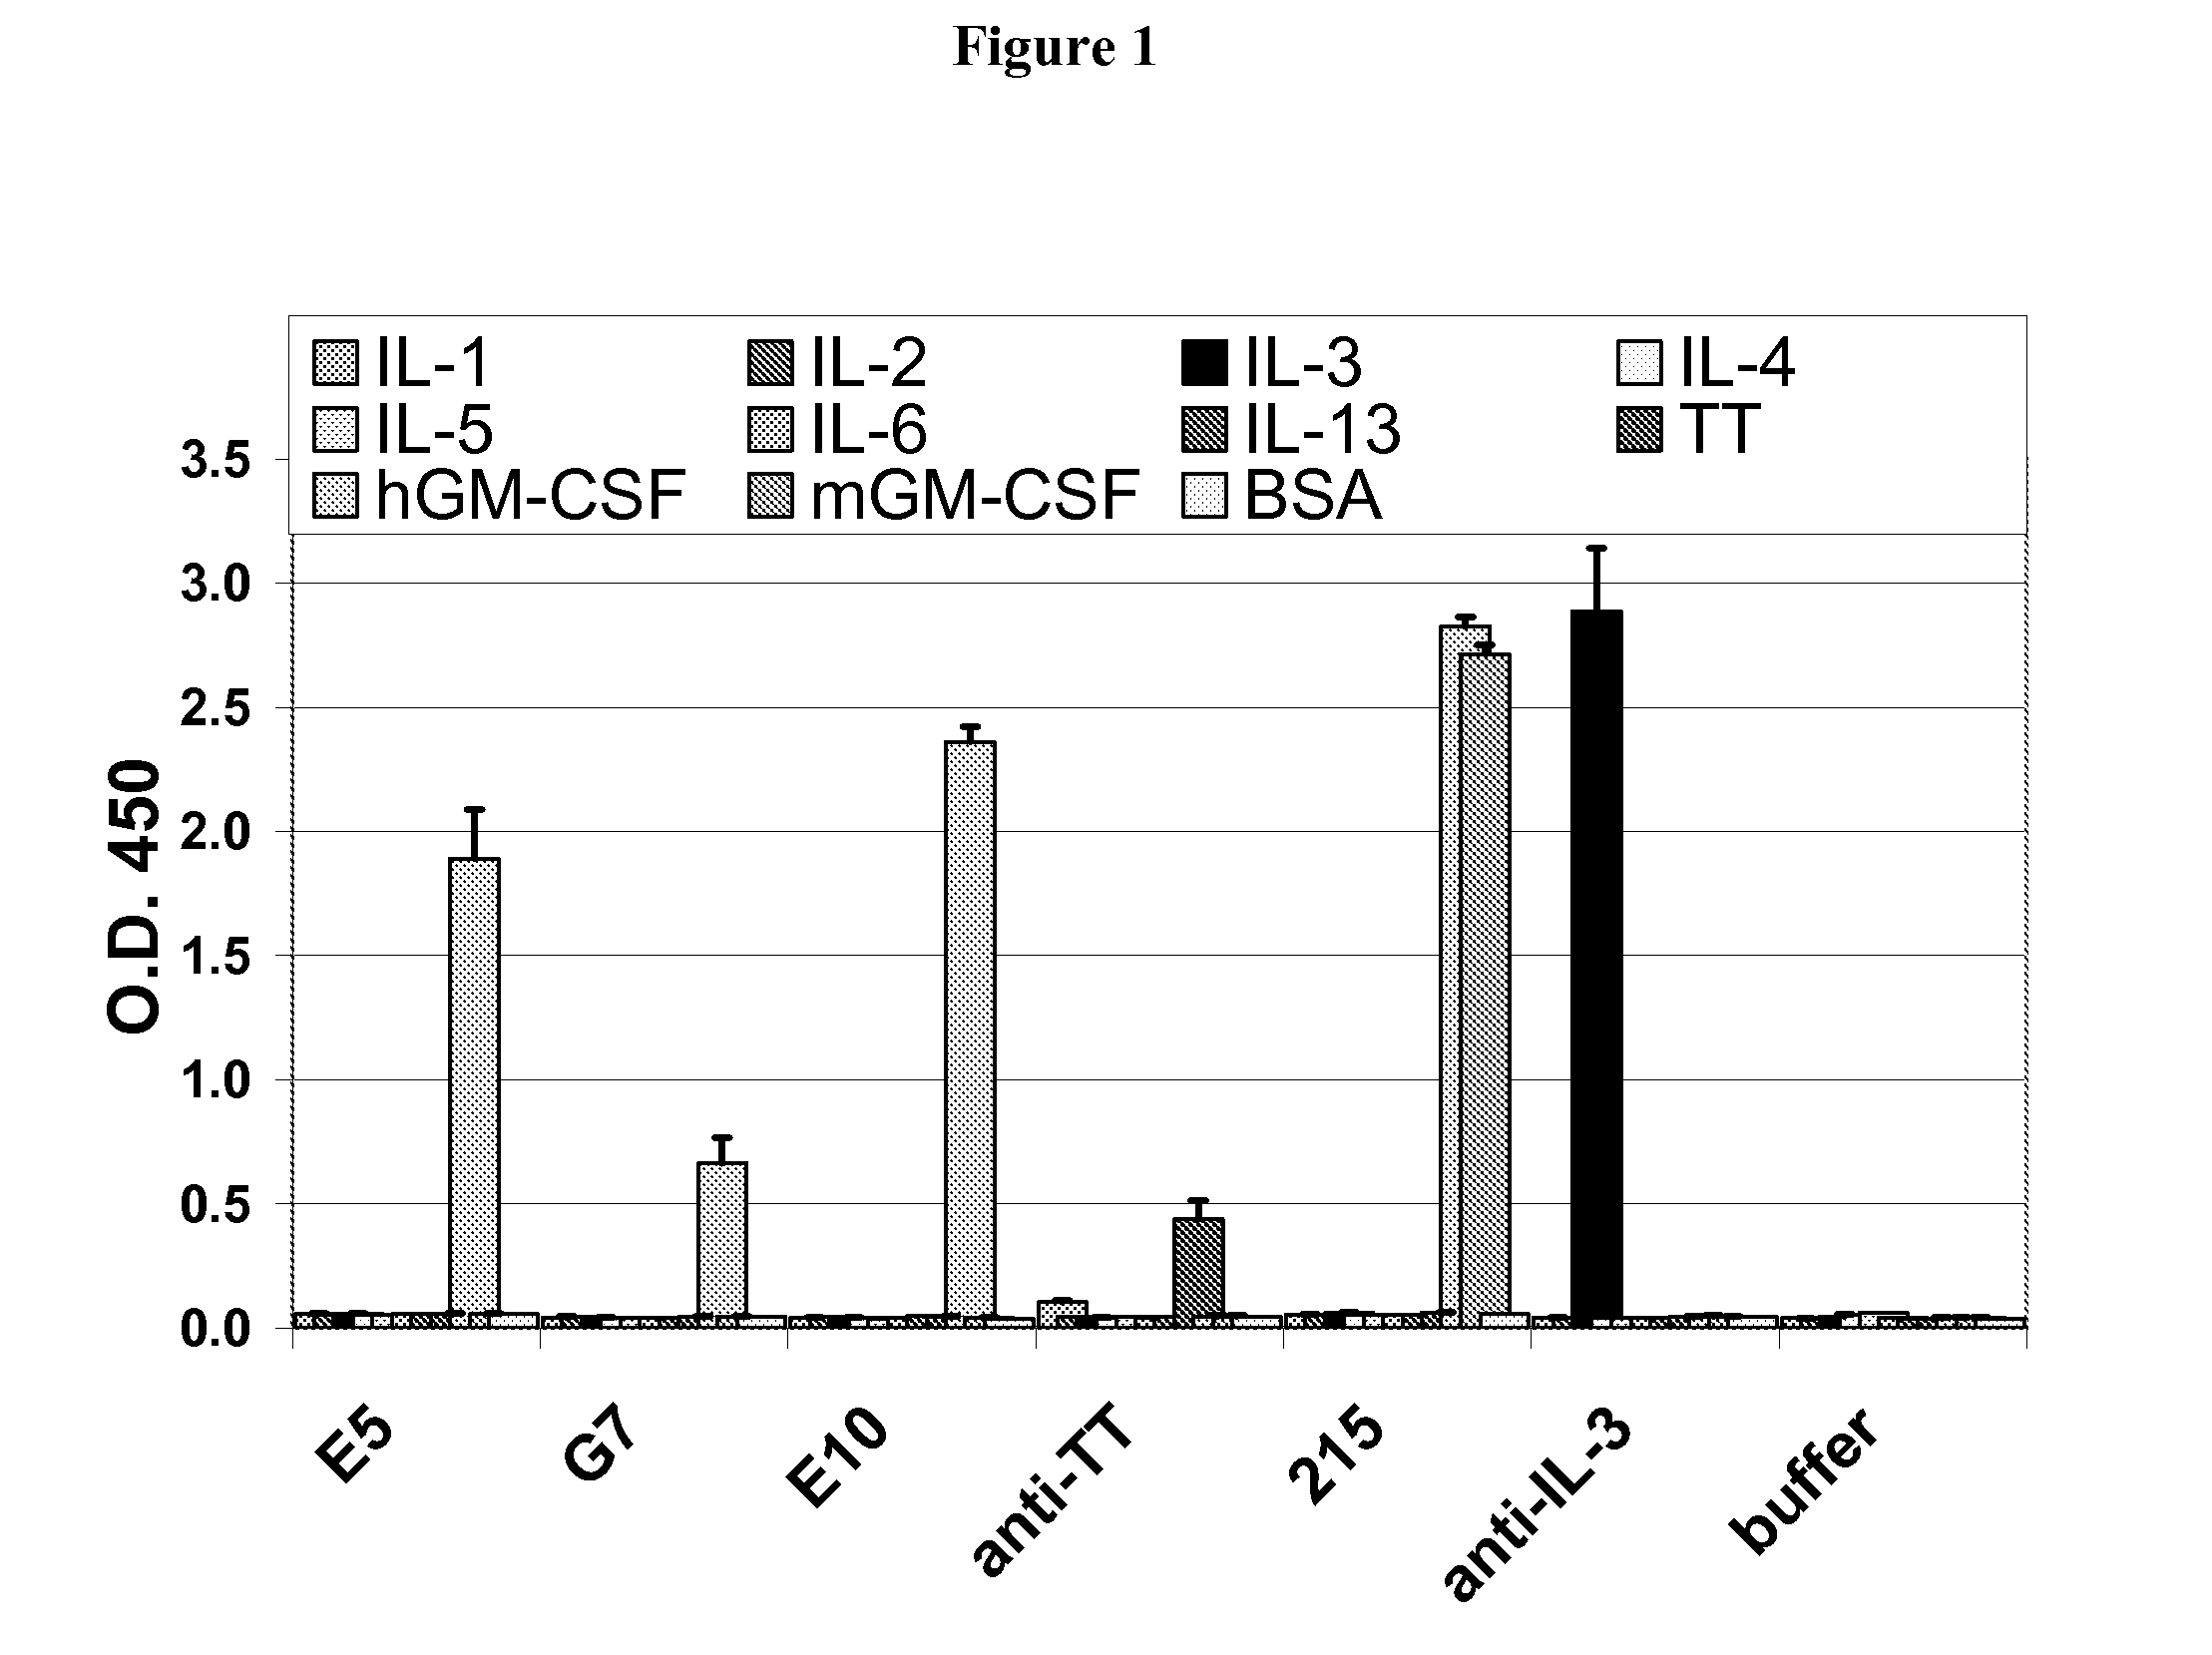 Antigenic GM-CSF peptides and antibodies to GM-CSF